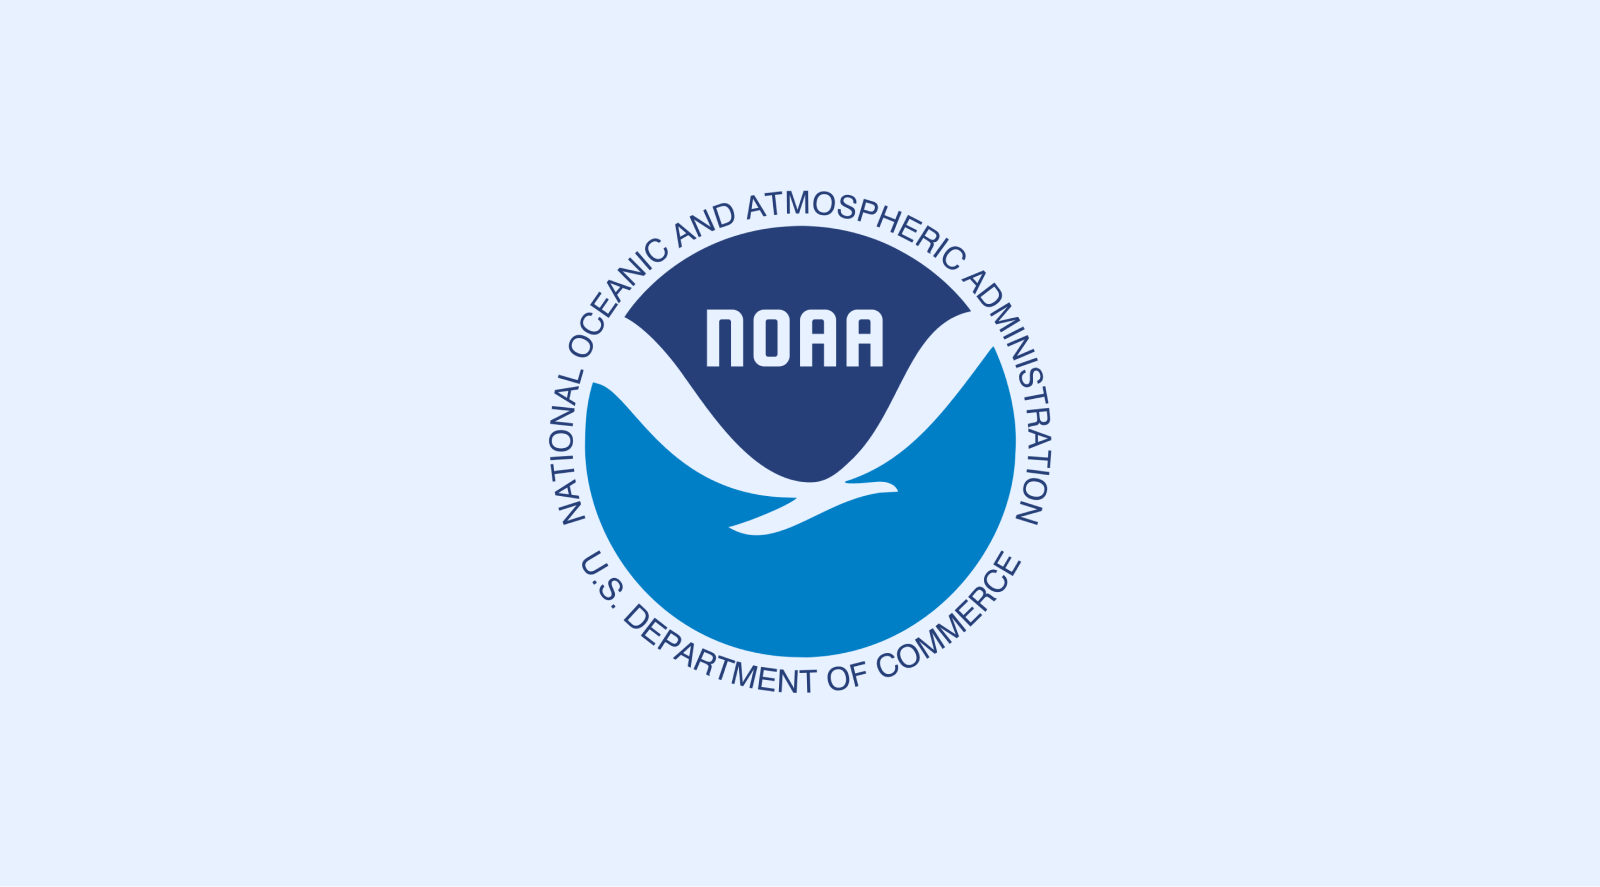 NOAA logo on a light blue background